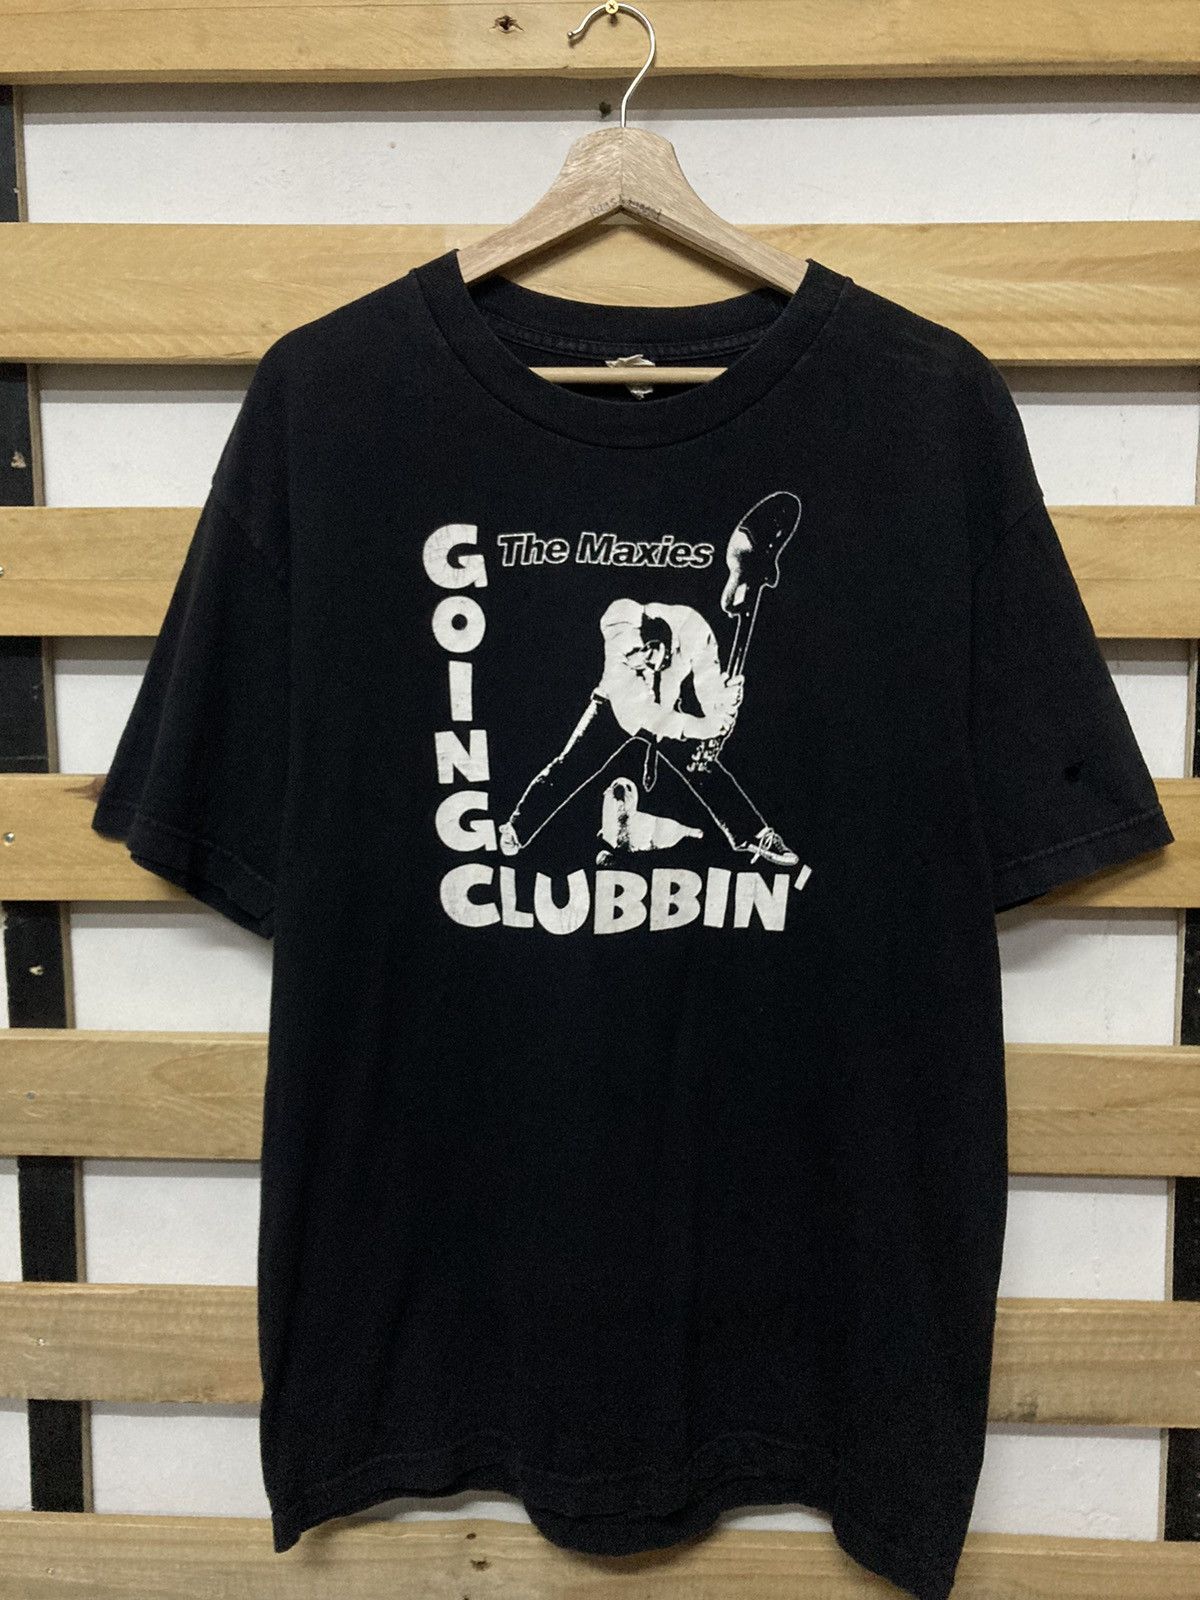 The Maxies Punk Rock Band 2011 Going Clubbin’ Album Tshirt - 1